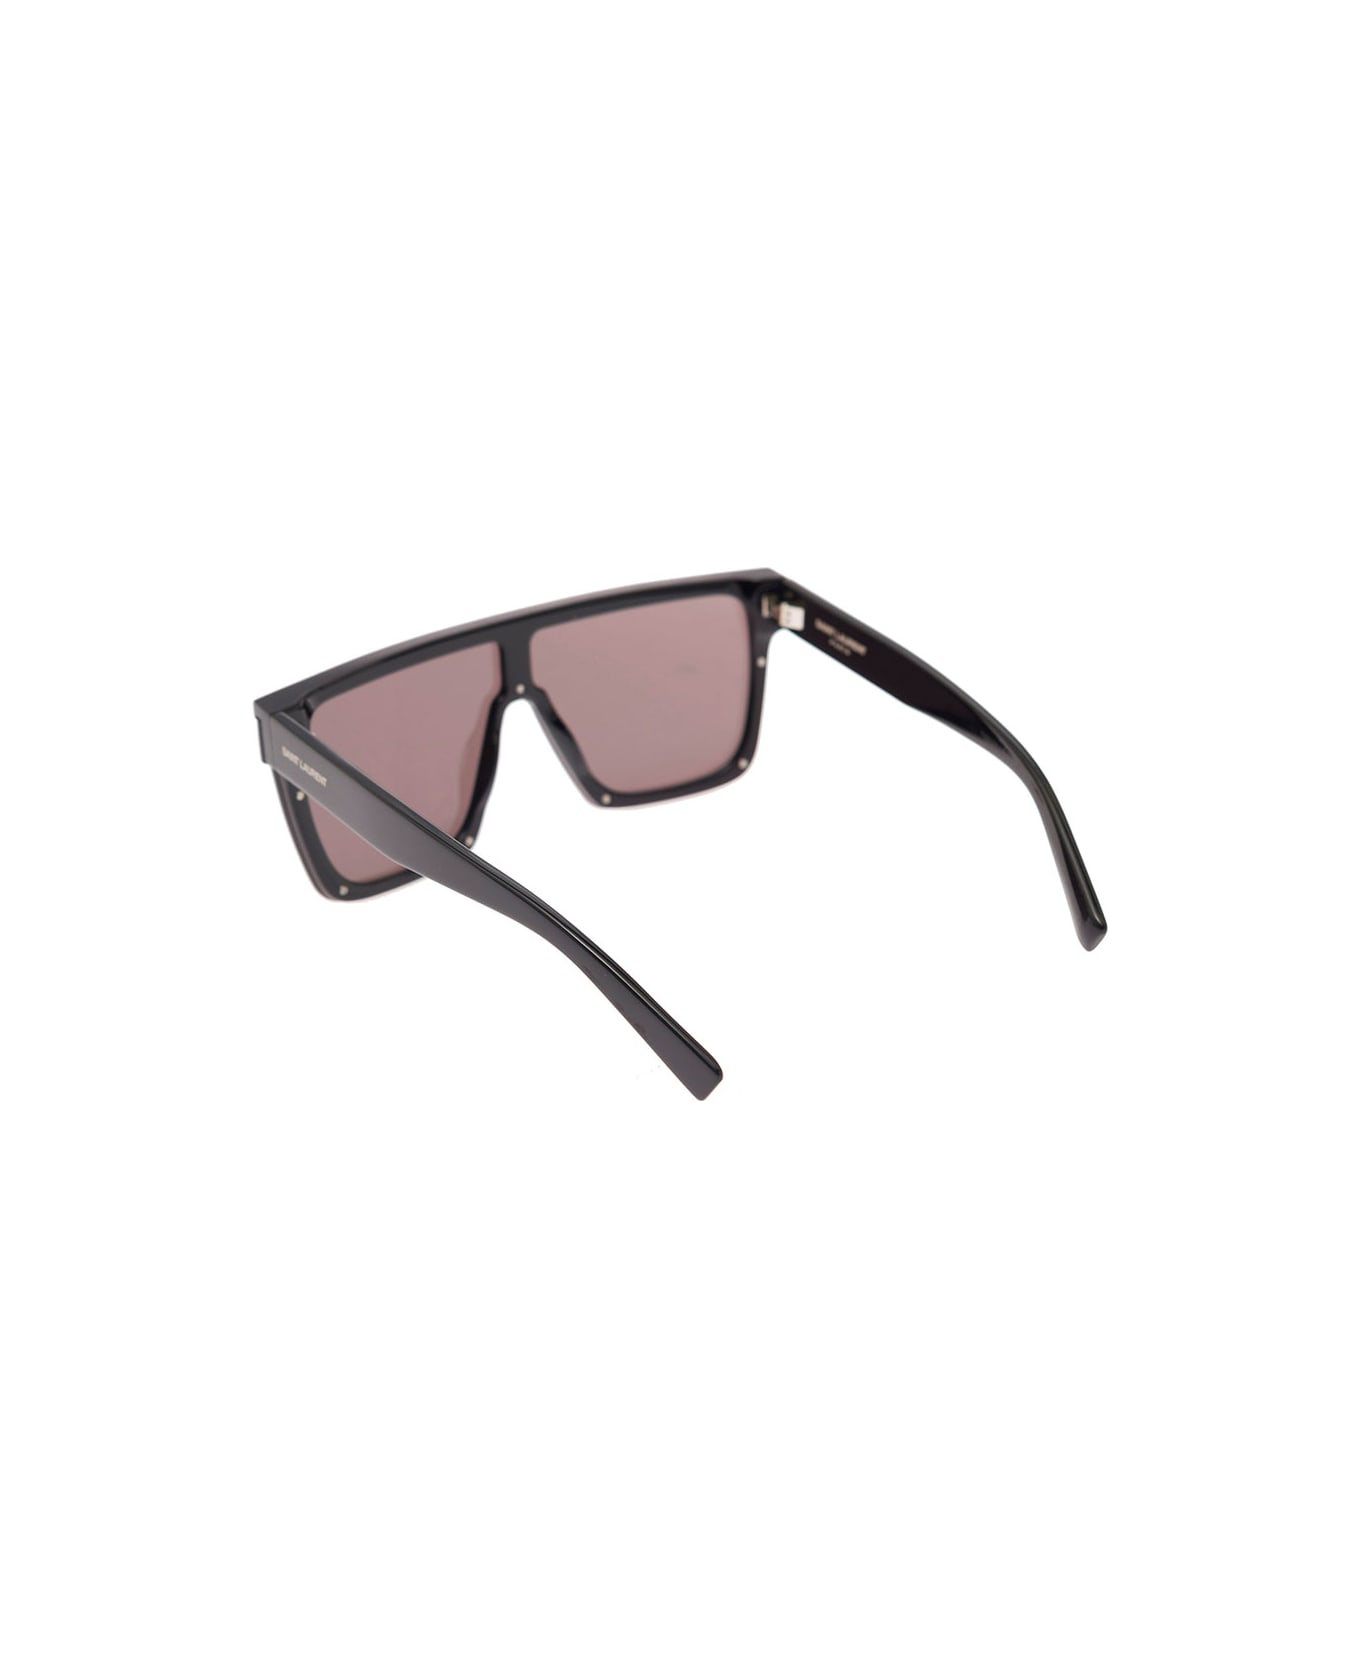 Saint Laurent Sl 607 Sunglasses - Black